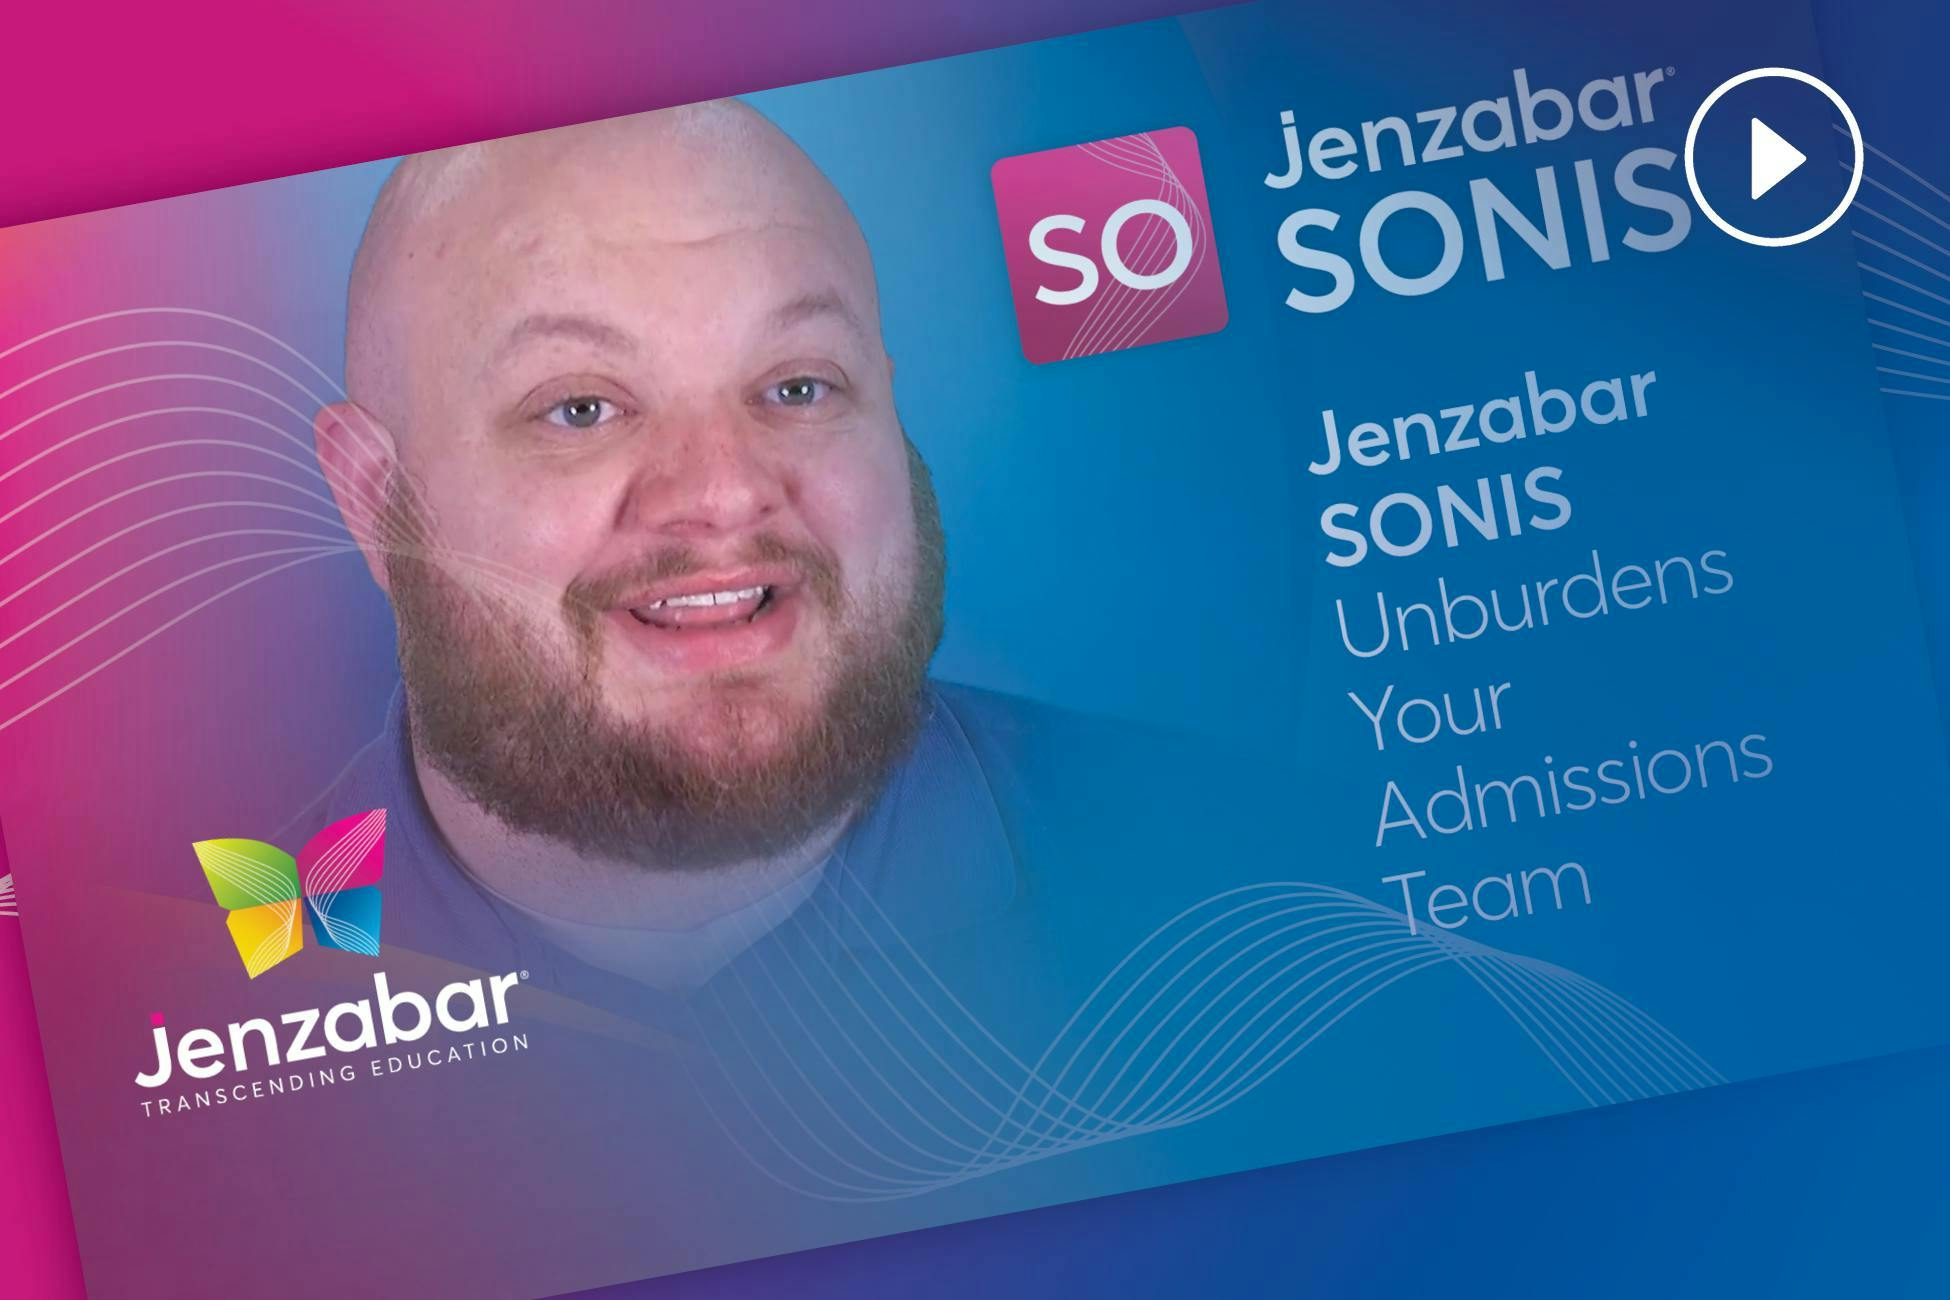 Jenzabar SONIS Unburdens Your Admissions Team